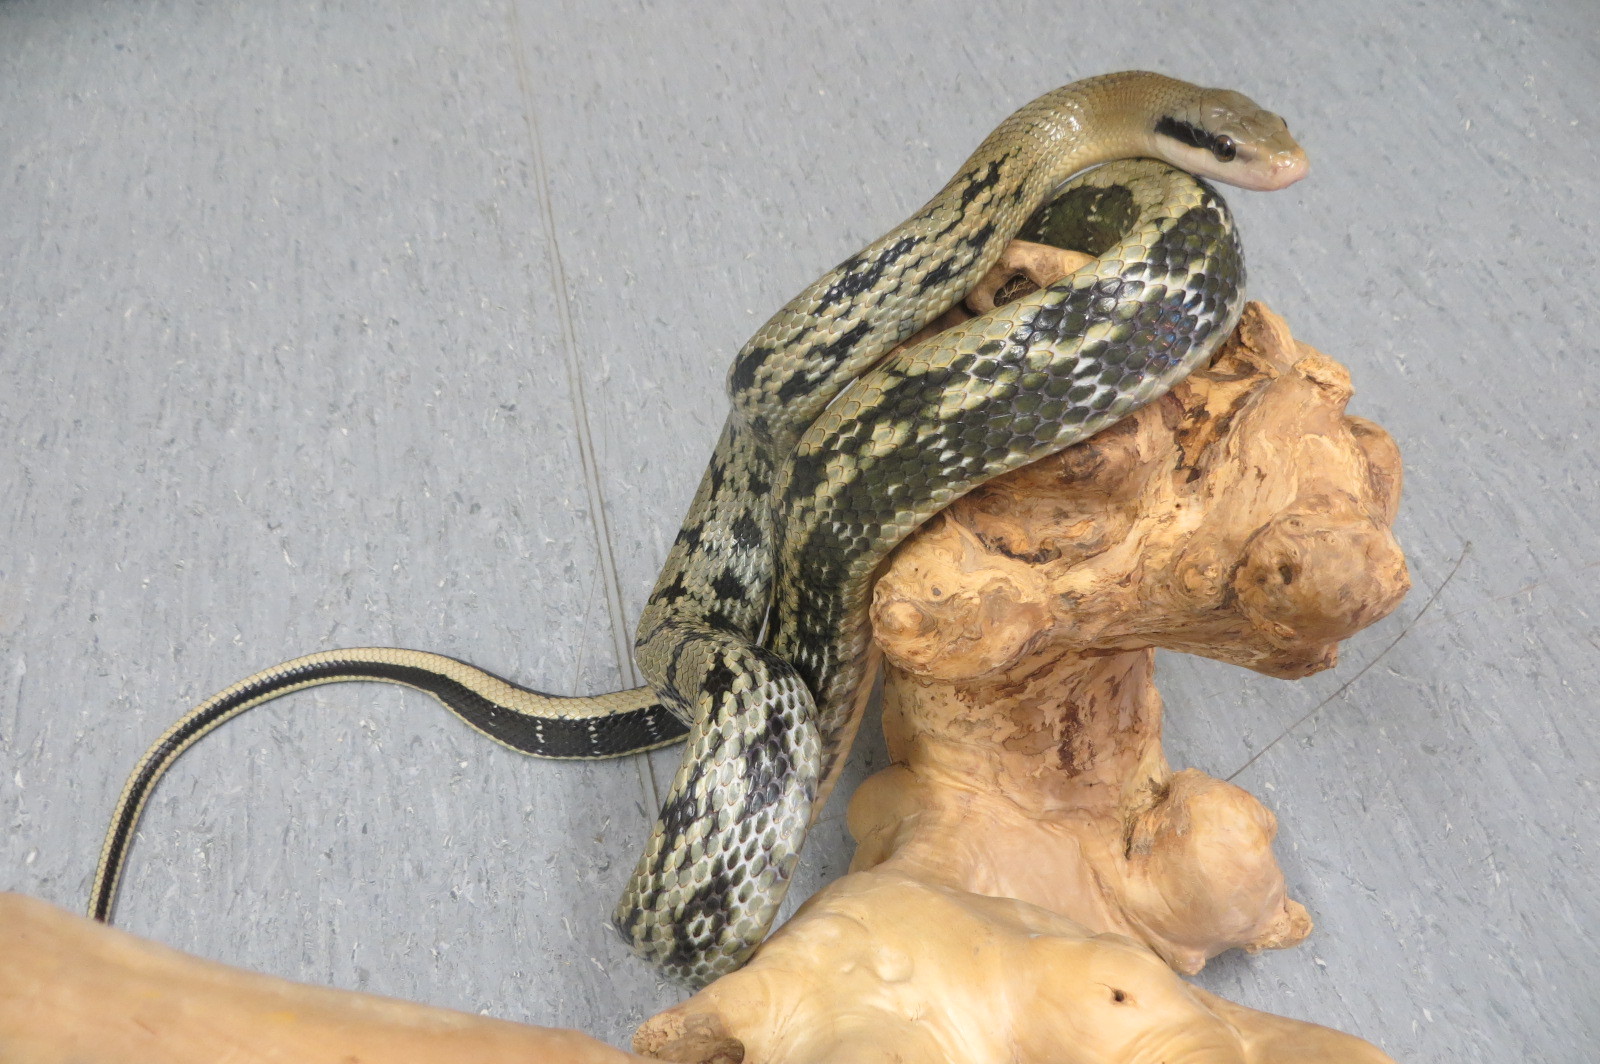 Tanya the rat snake